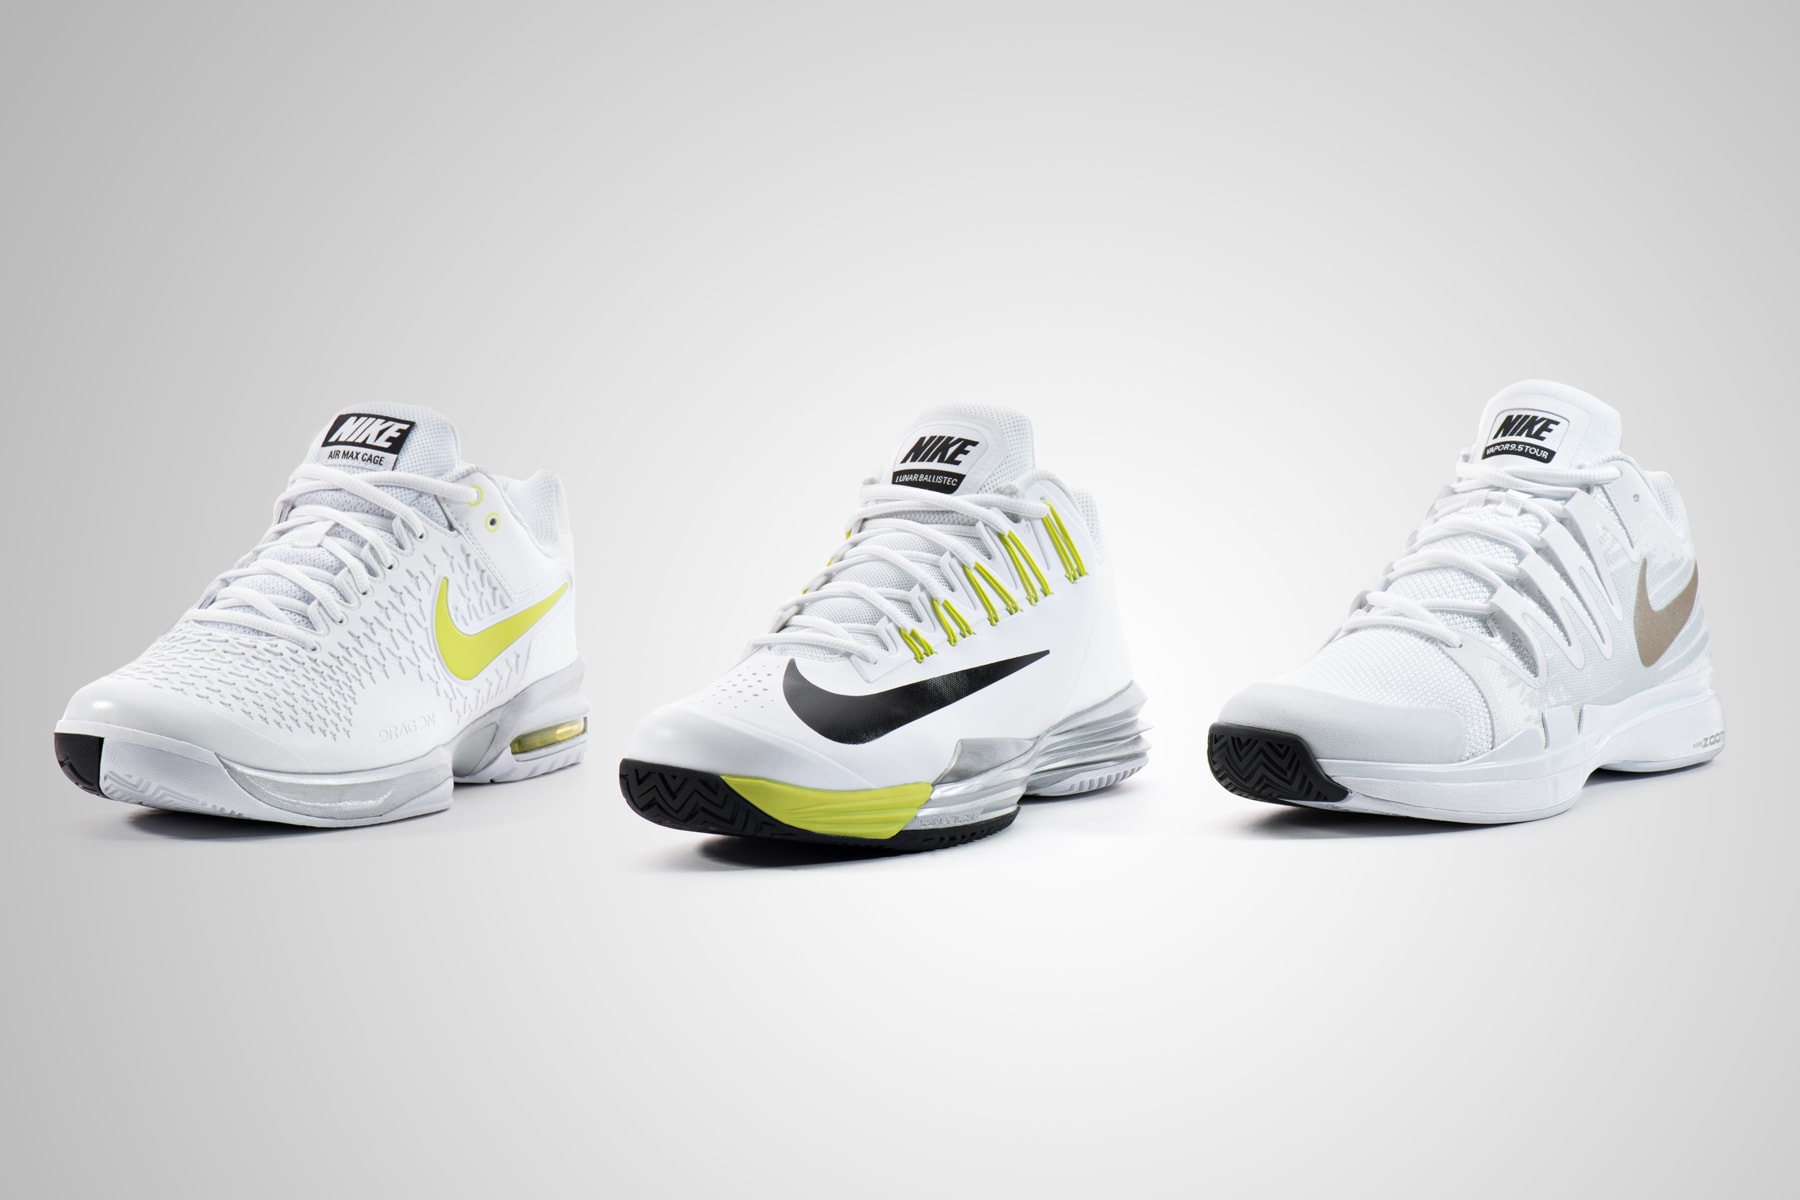 Distraer Estar satisfecho Celo Nike Tennis 2014 Wimbledon Footwear Collection | Hypebeast